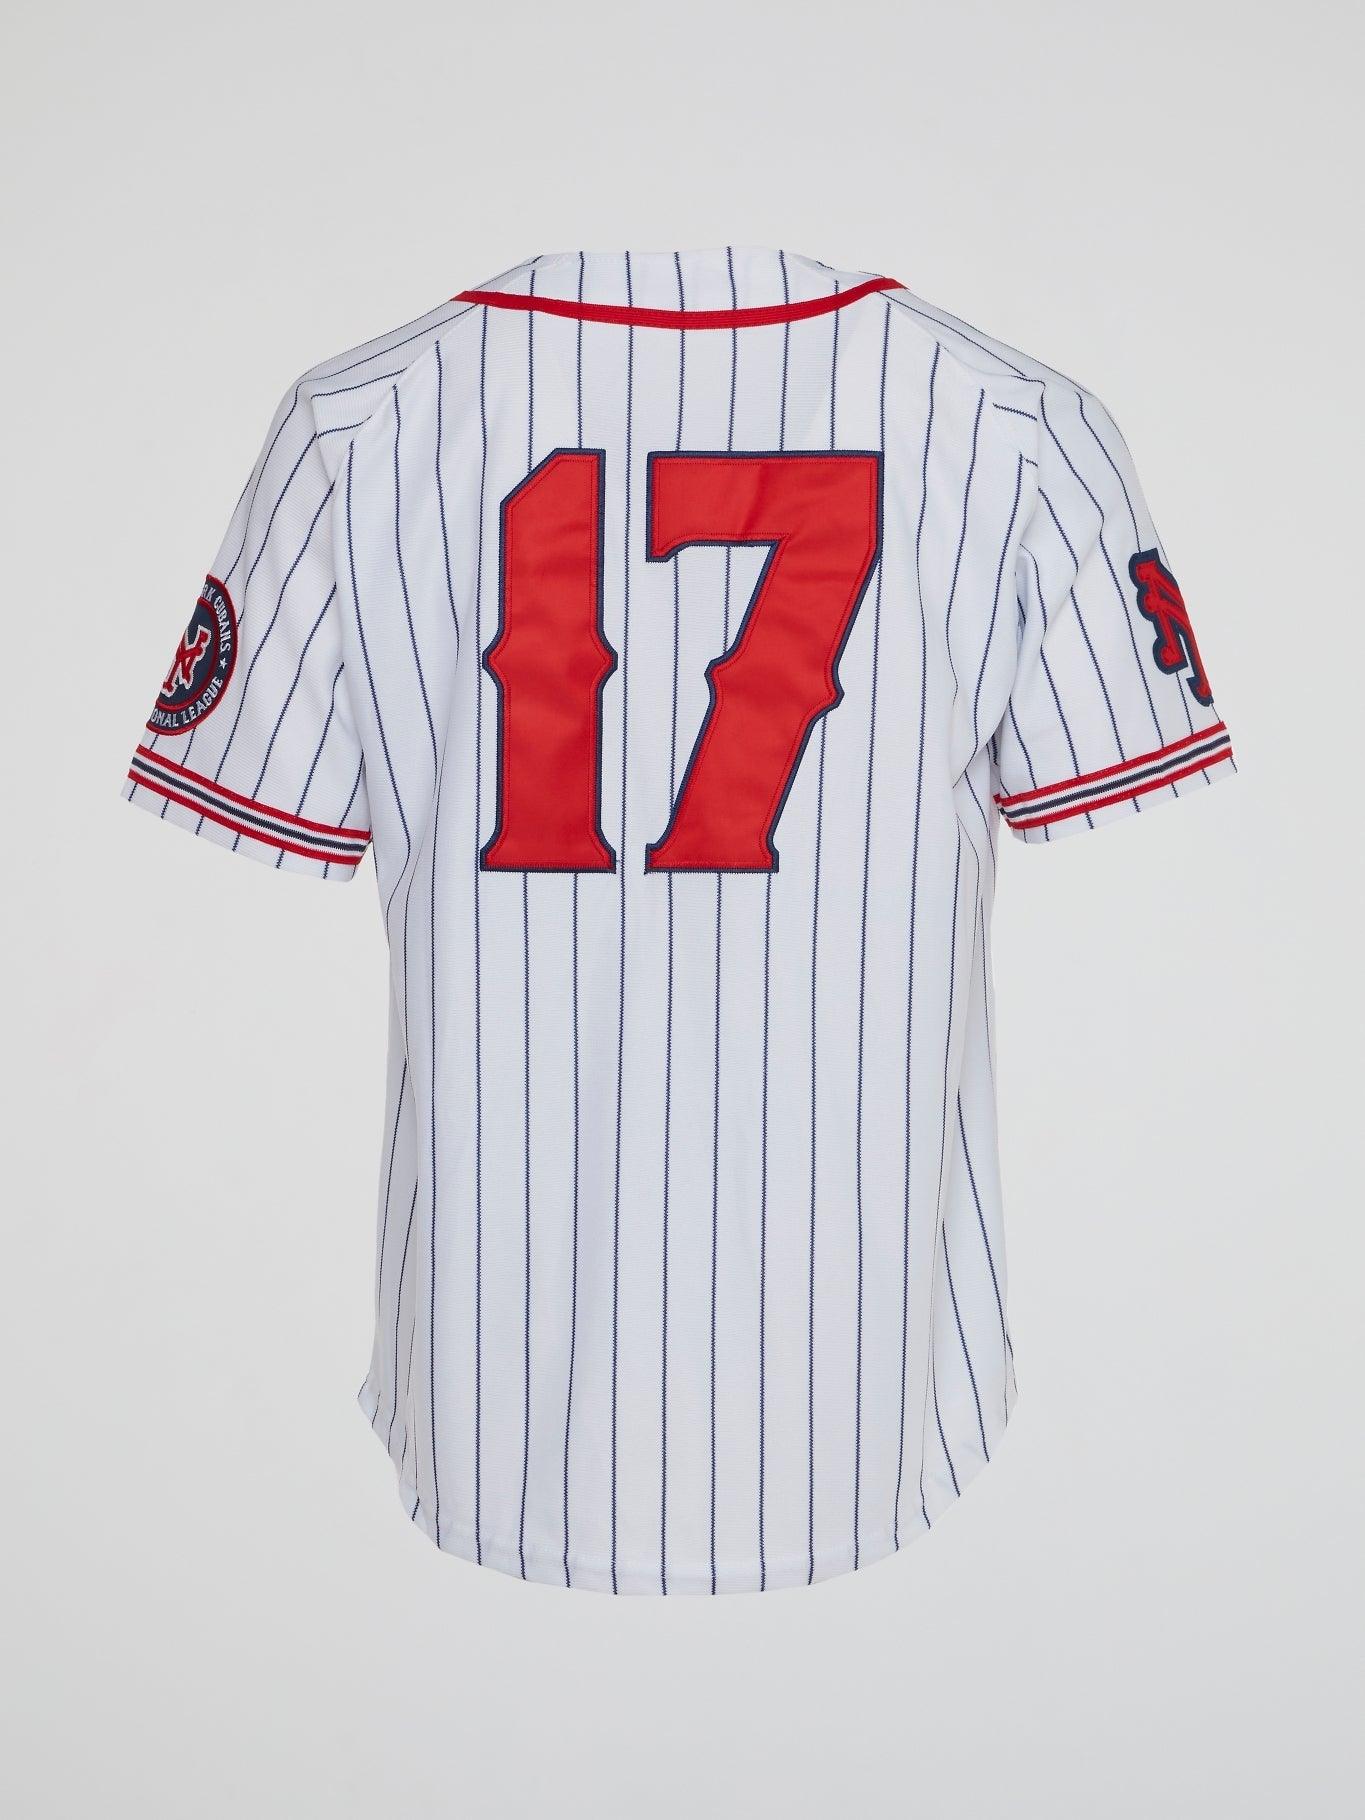 New York Cubans Baseball Jersey - B-Hype Society